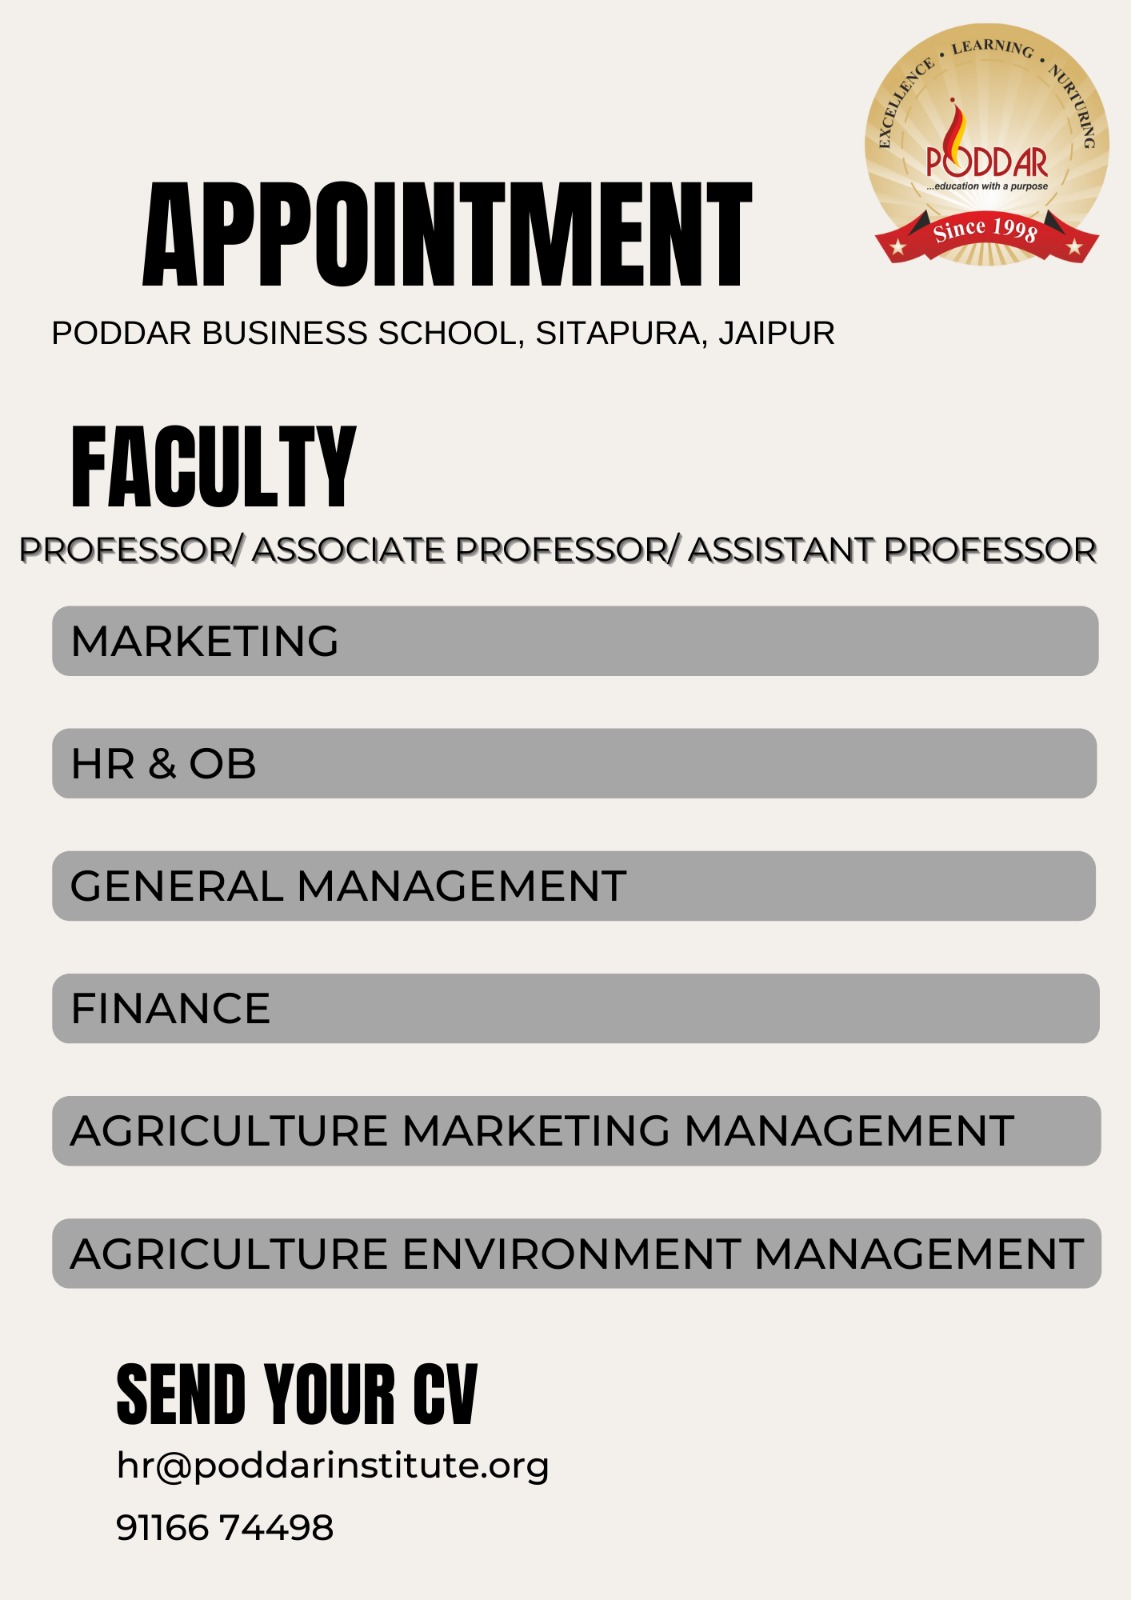 Professor / Associate Professor / Assistant Professor